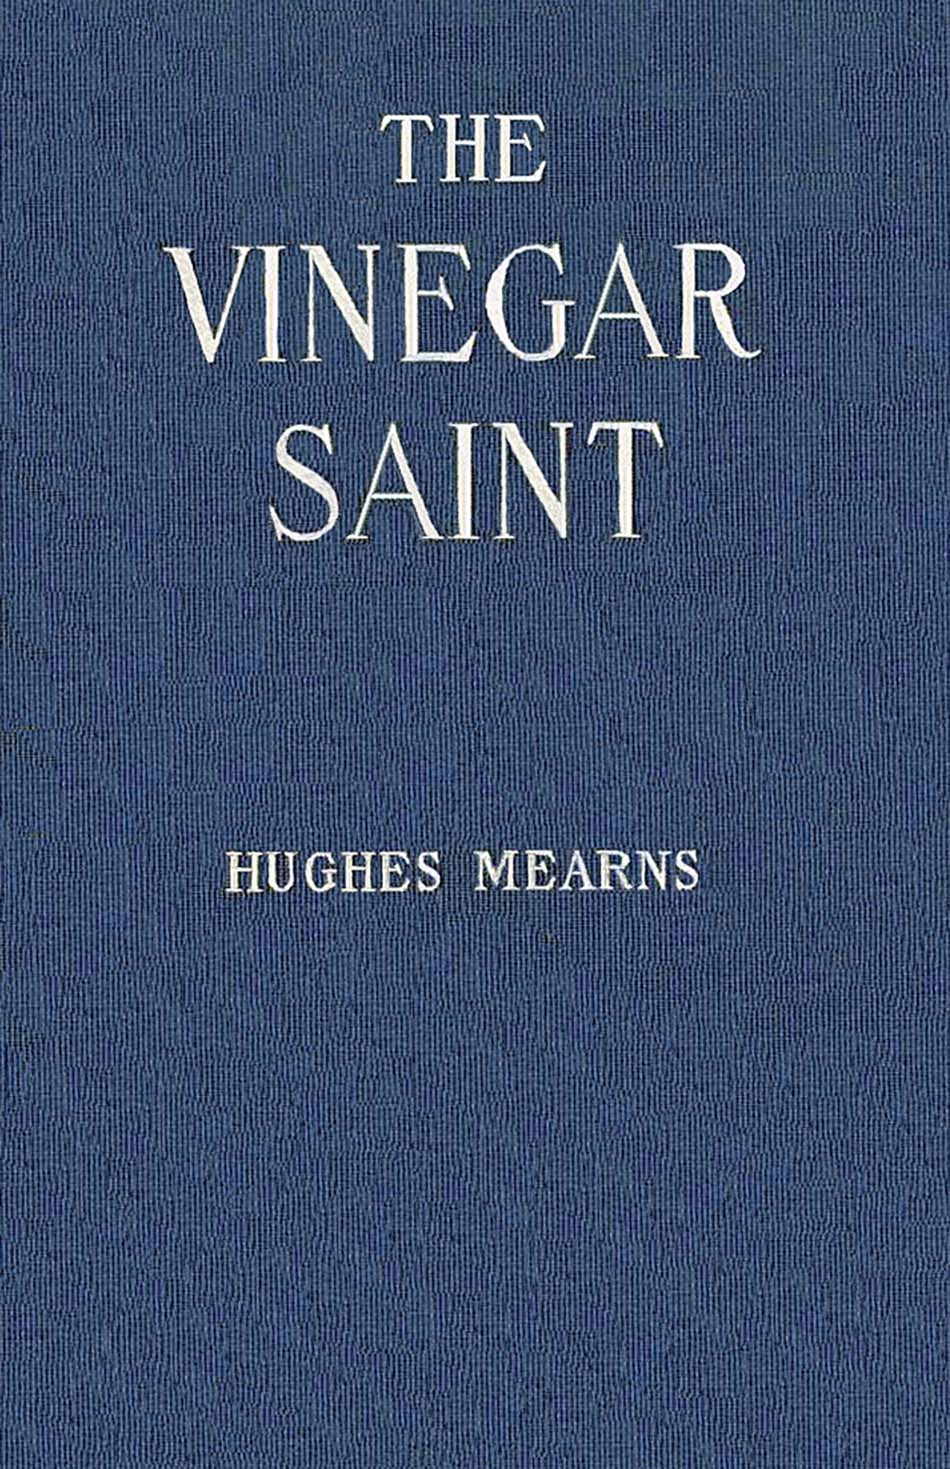 The Vinegar Saint Project Gutenberg